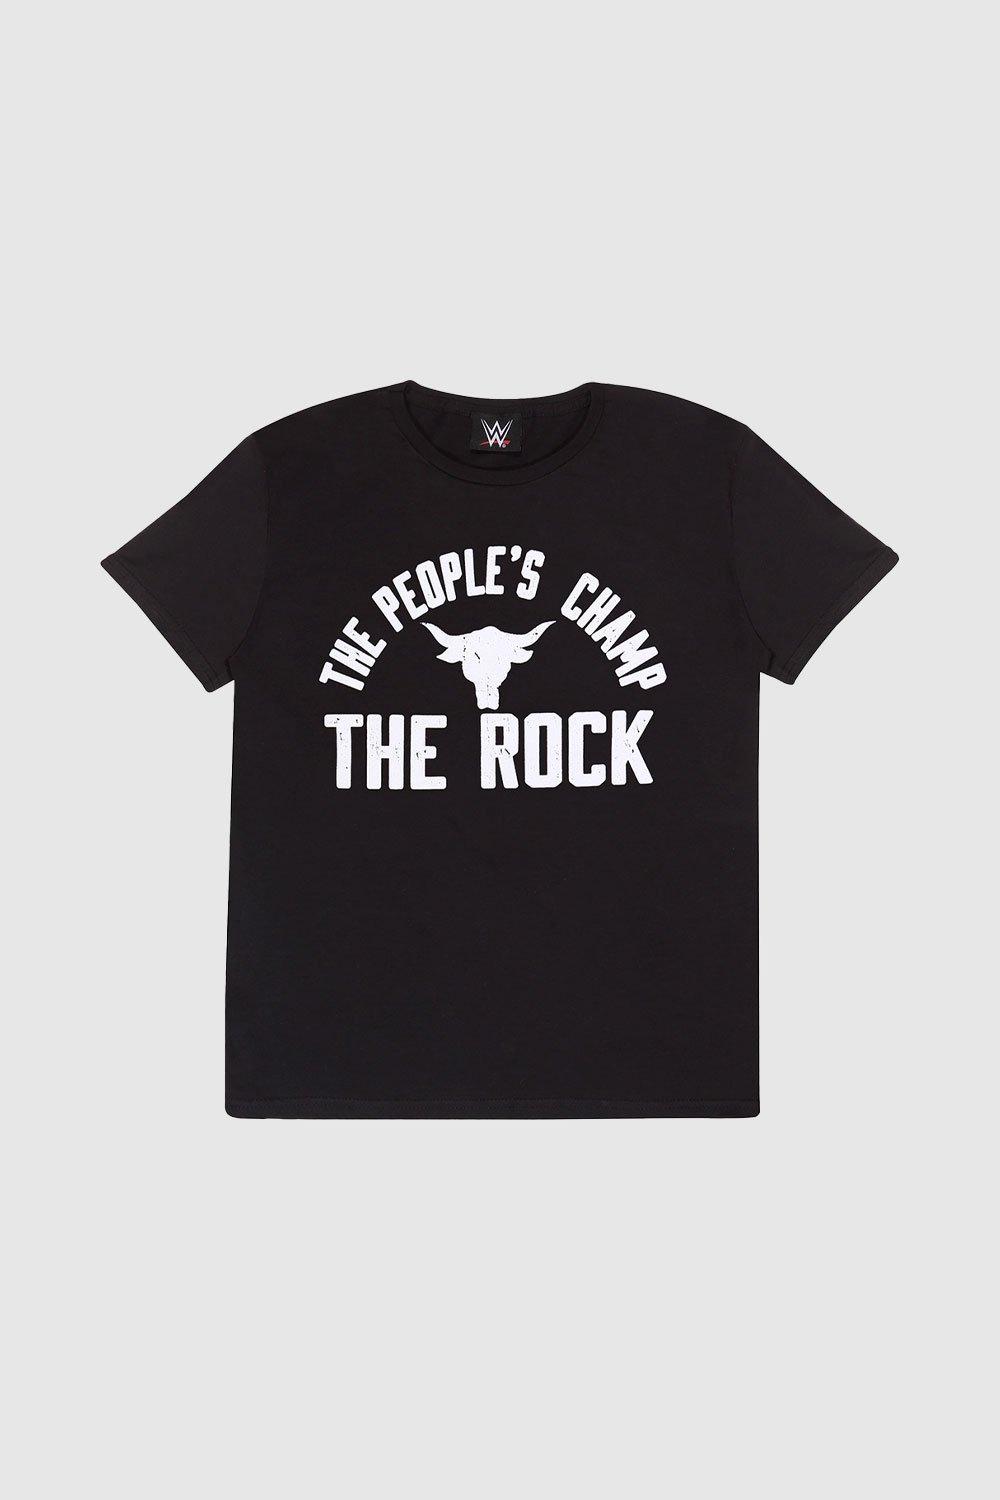 The Rock — футболка «Народный чемпион» WWE, черный